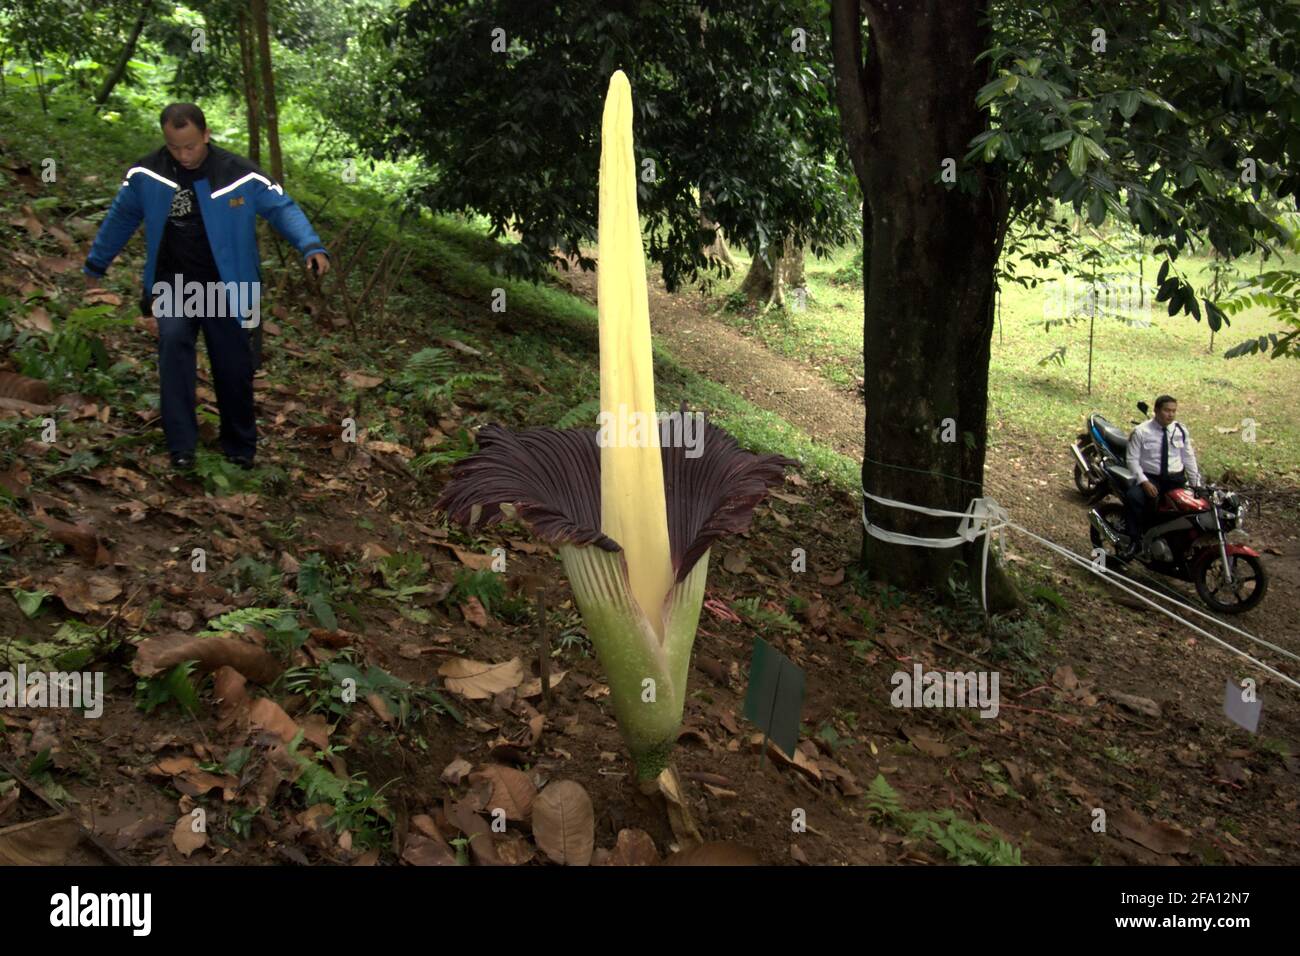 Titan arum (Amorphophallus titanum) d'origine sud Sumatra fleurit aux jardins botaniques de Bogor, Bogor, West Java, Indonésie. Banque D'Images